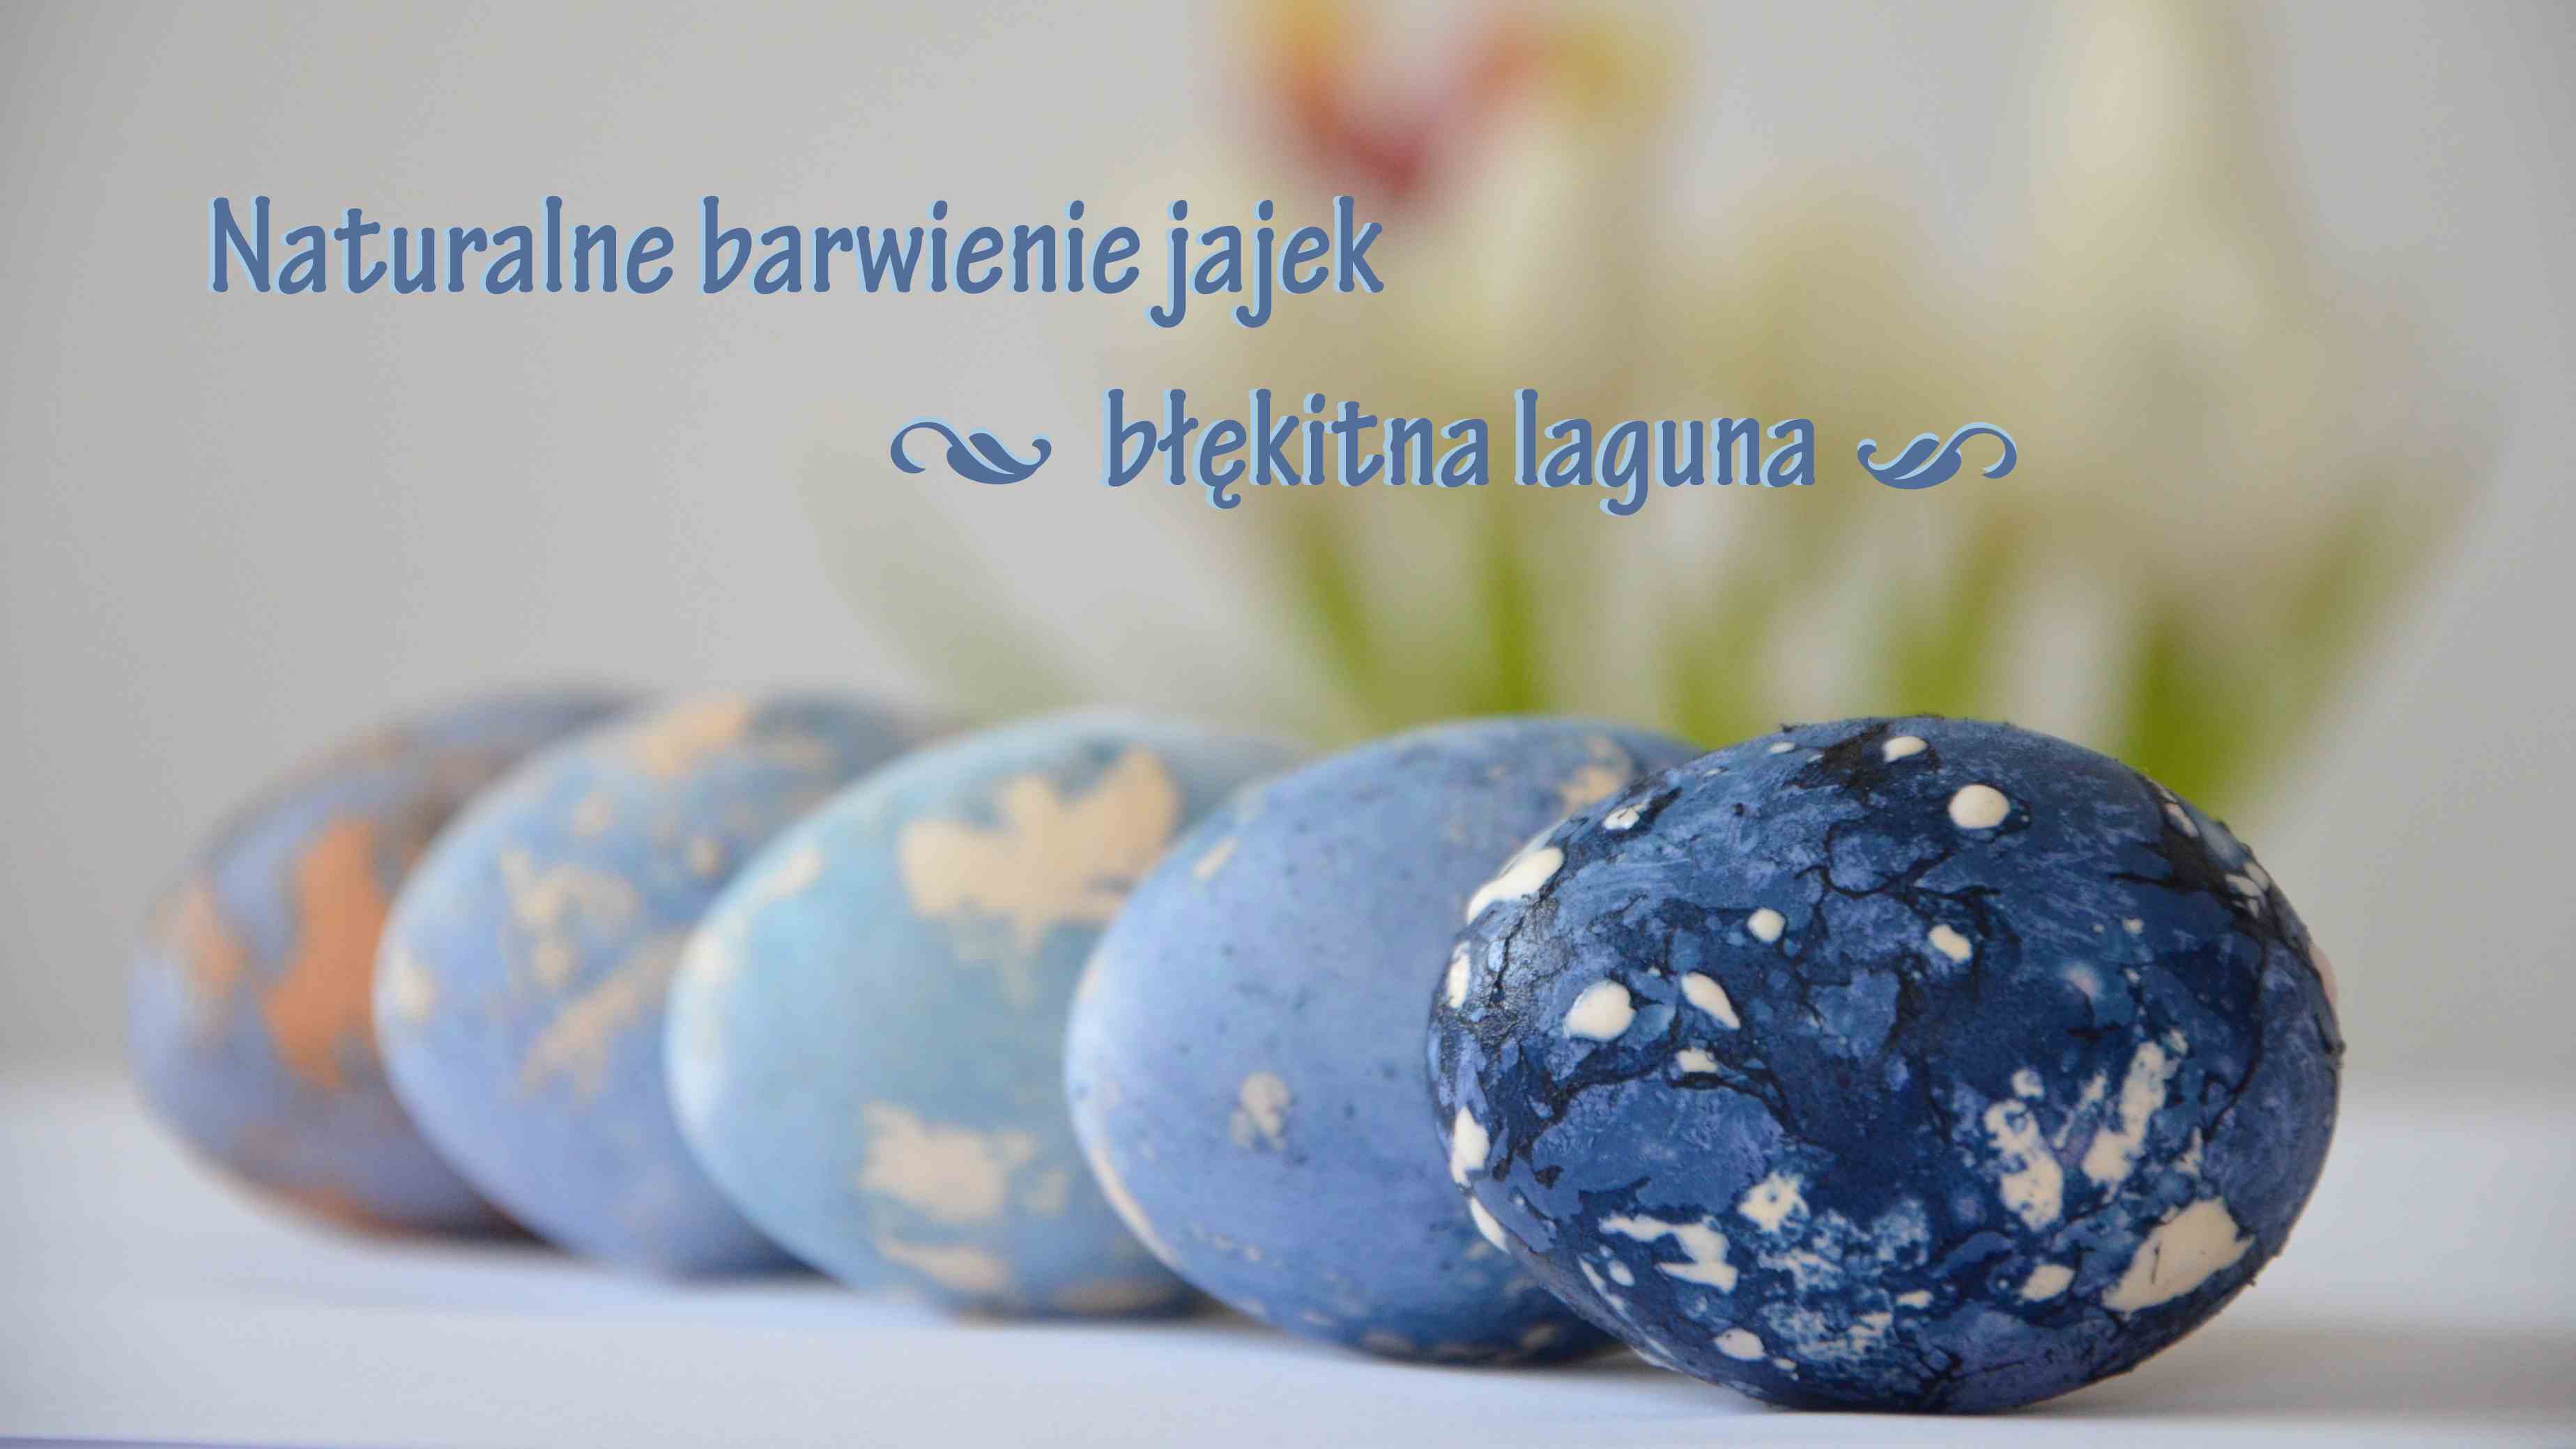 Naturalne barwienie jajek - błękitna laguna